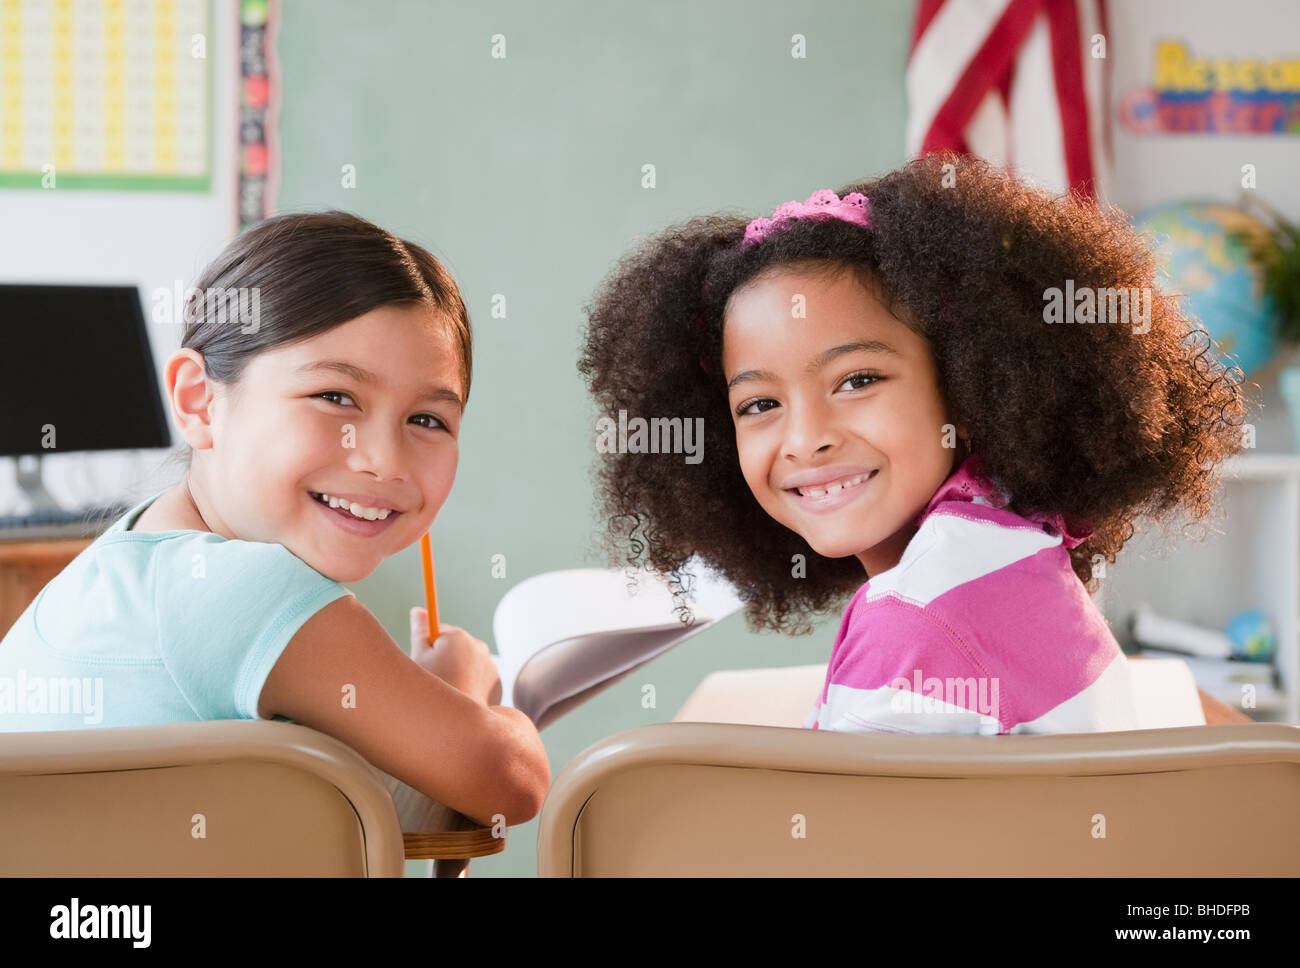 School girls smiling in classroom Stock Photo